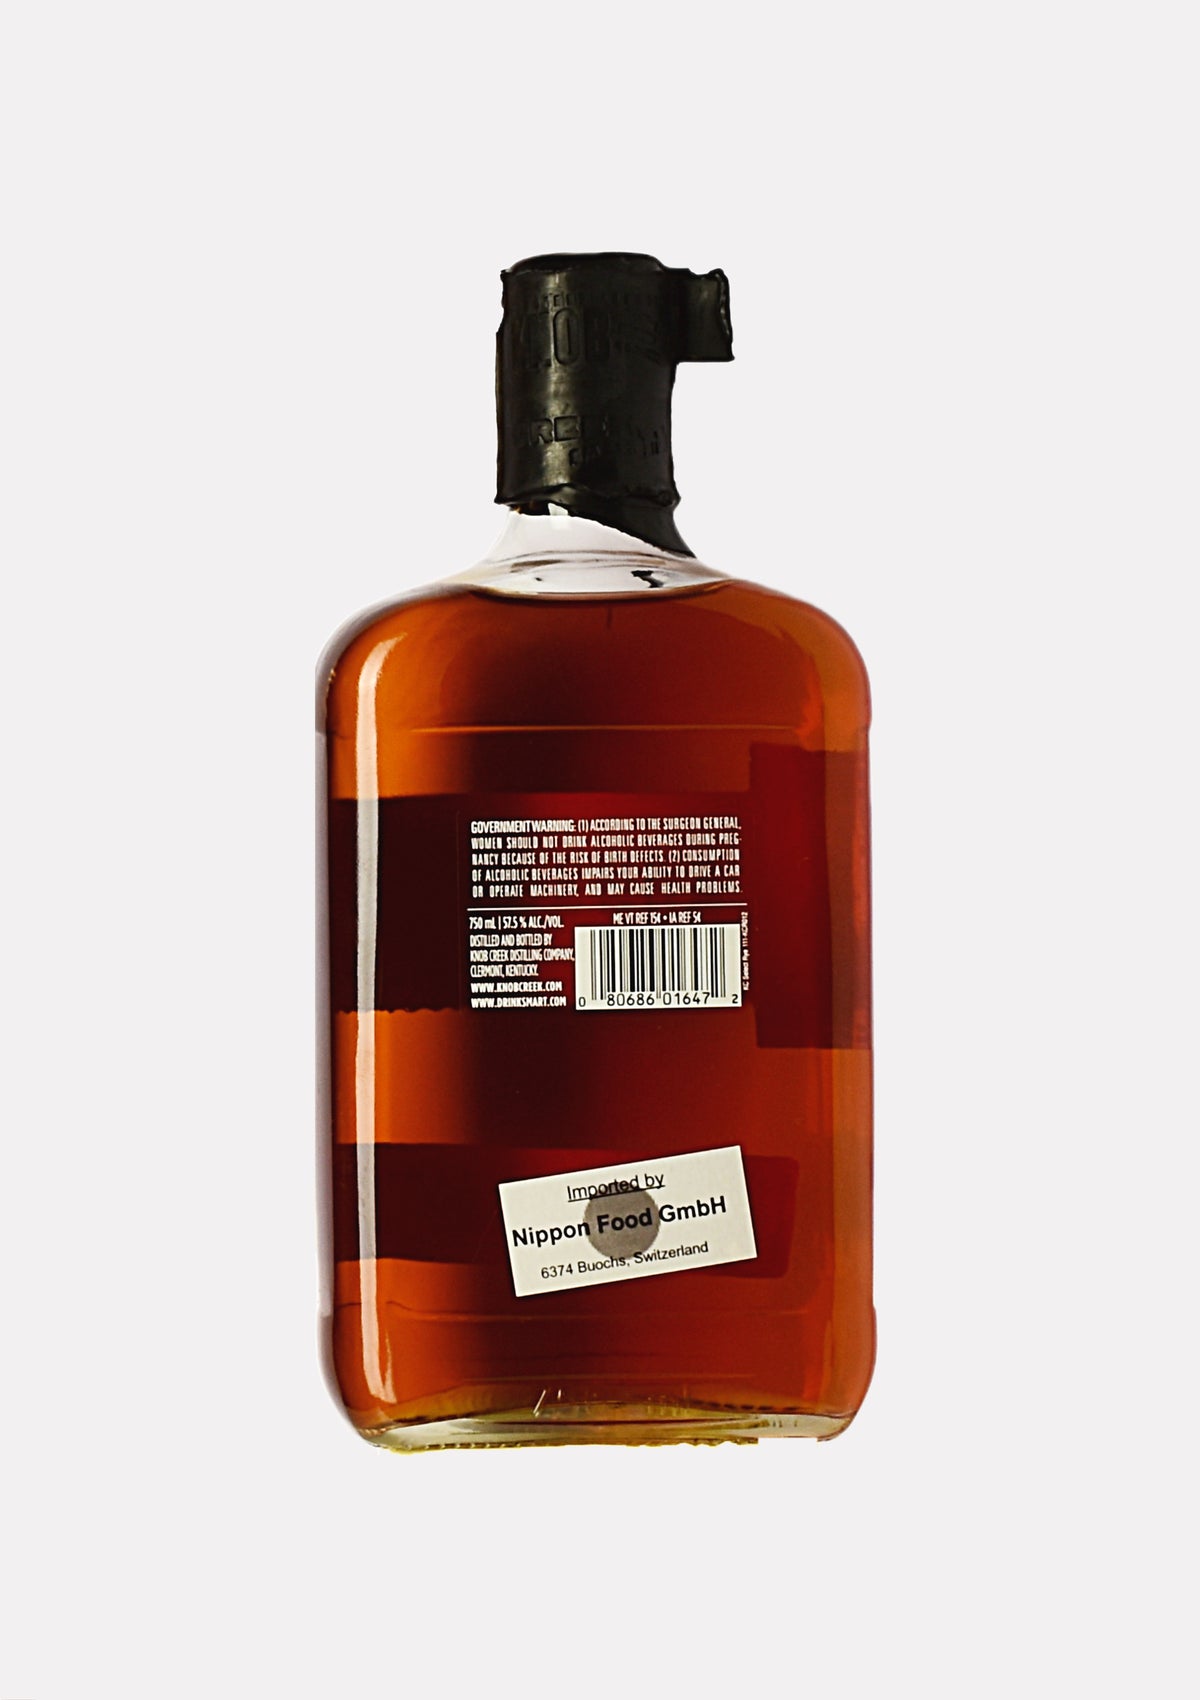 Knob Creek Single Barrel Rye Whiskey